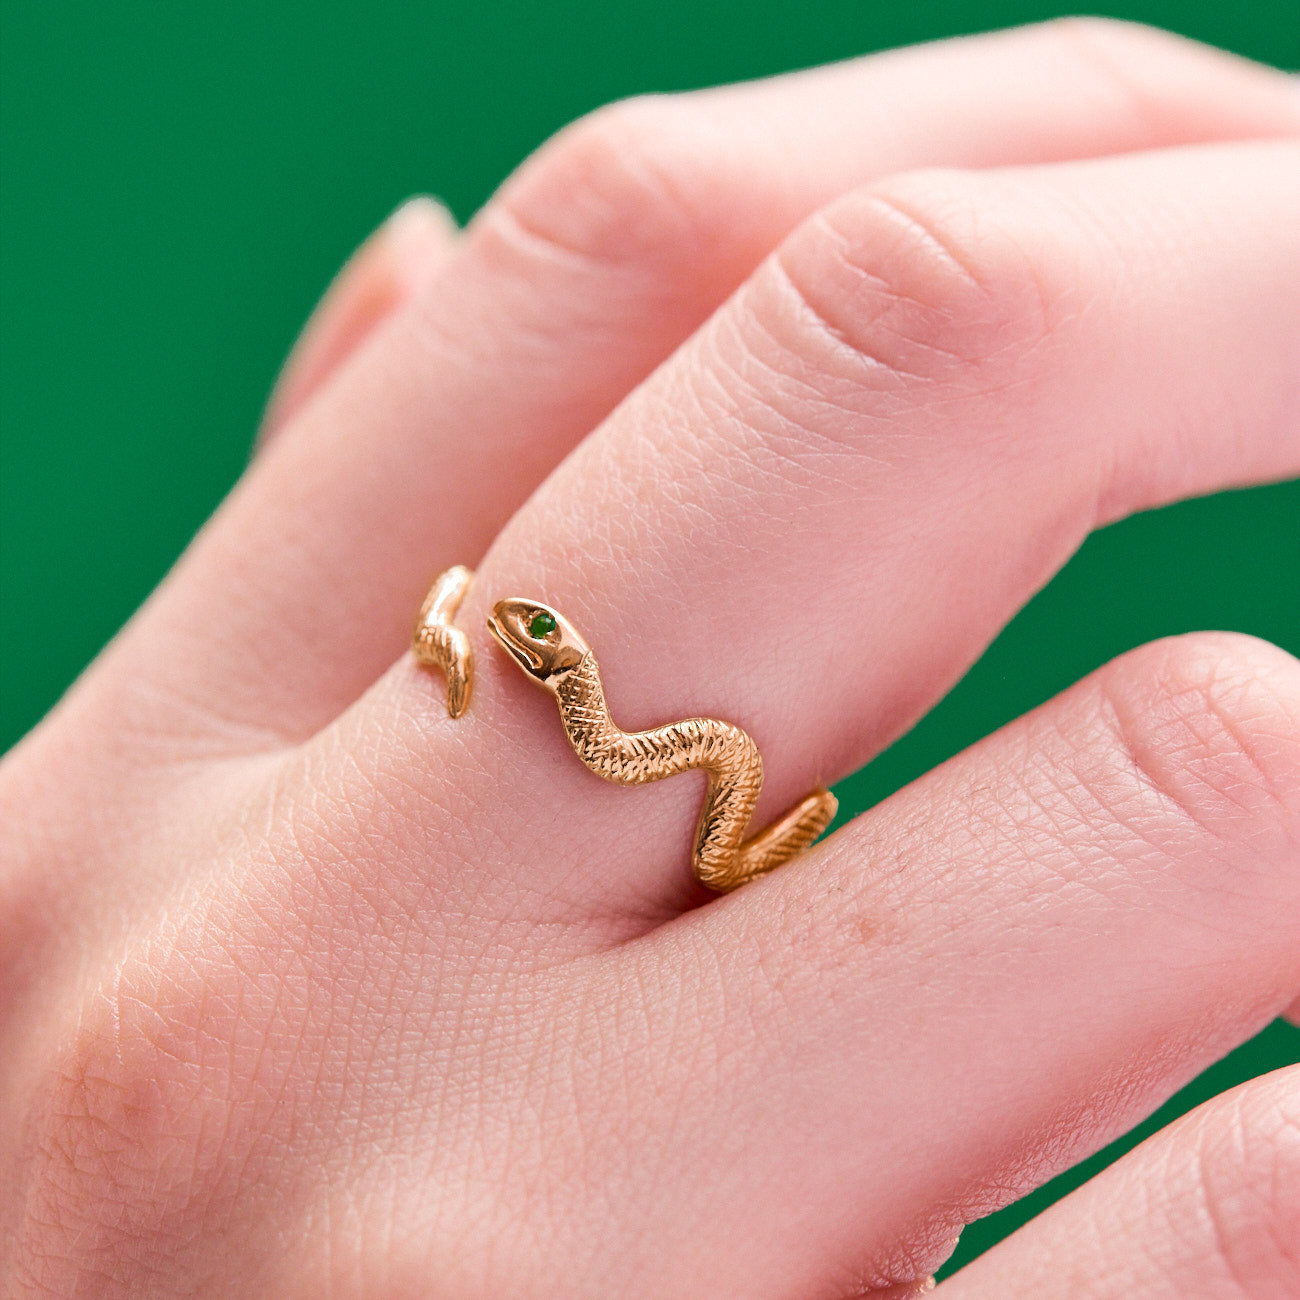 Gatekeeper Snake Serpent Ring in 18 Karat Yellow Gold with Emerald Set Eye by Solange Azagury-Partridge On hand